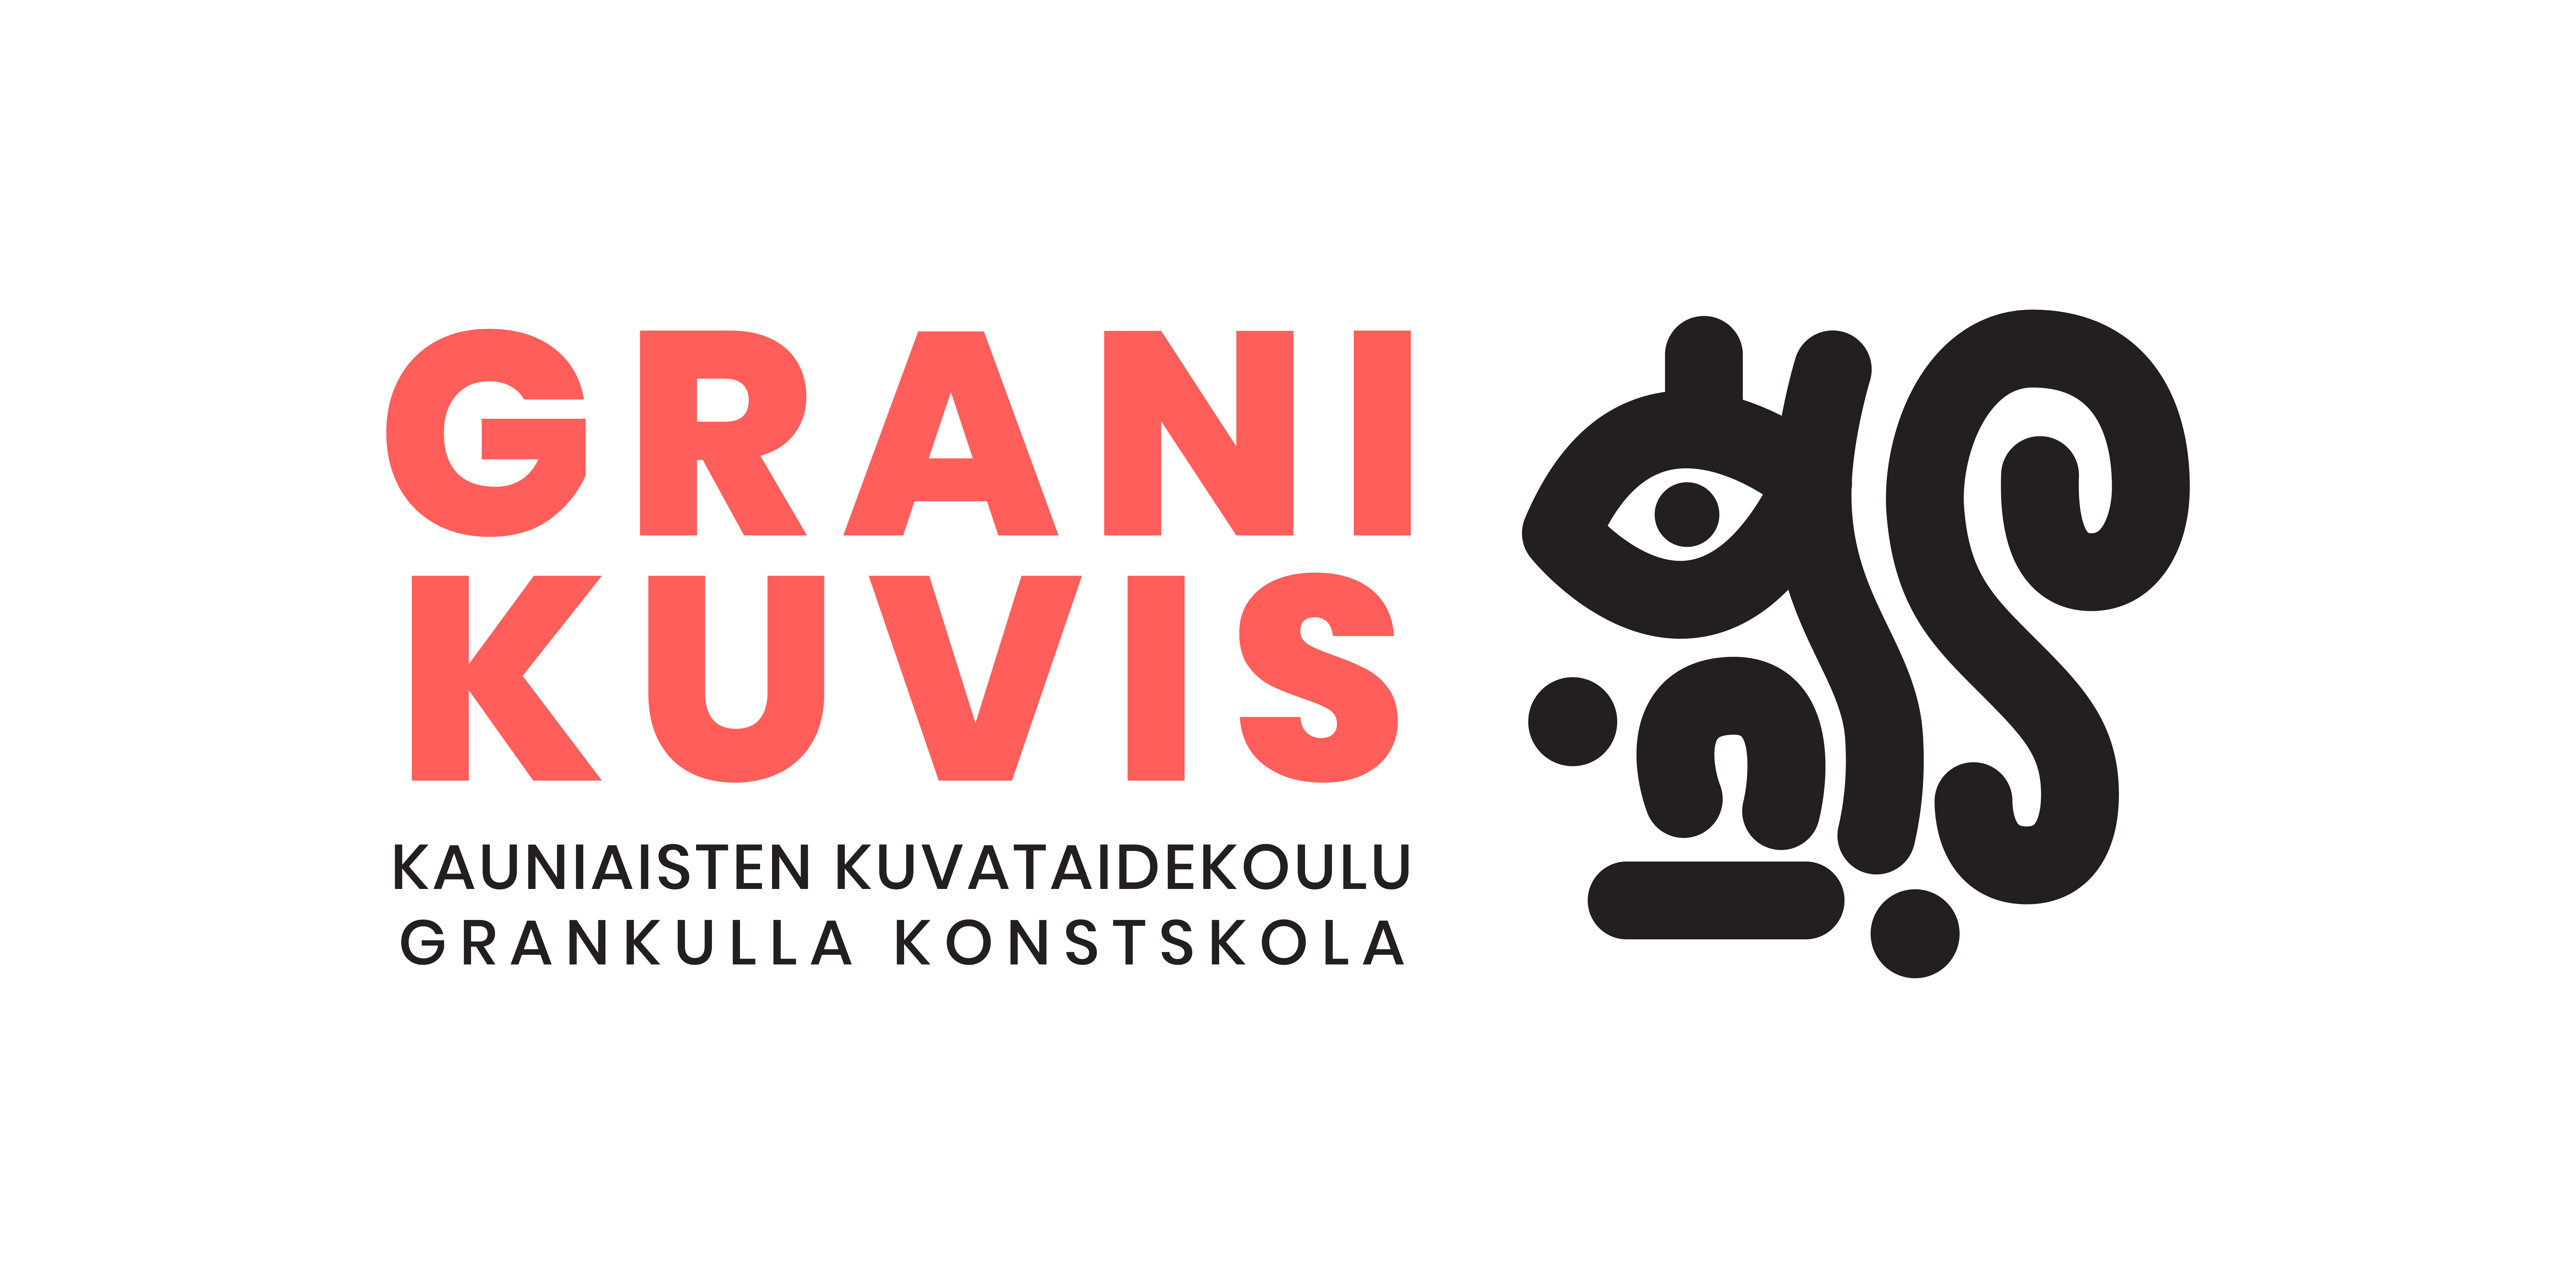 Granikuvis logo